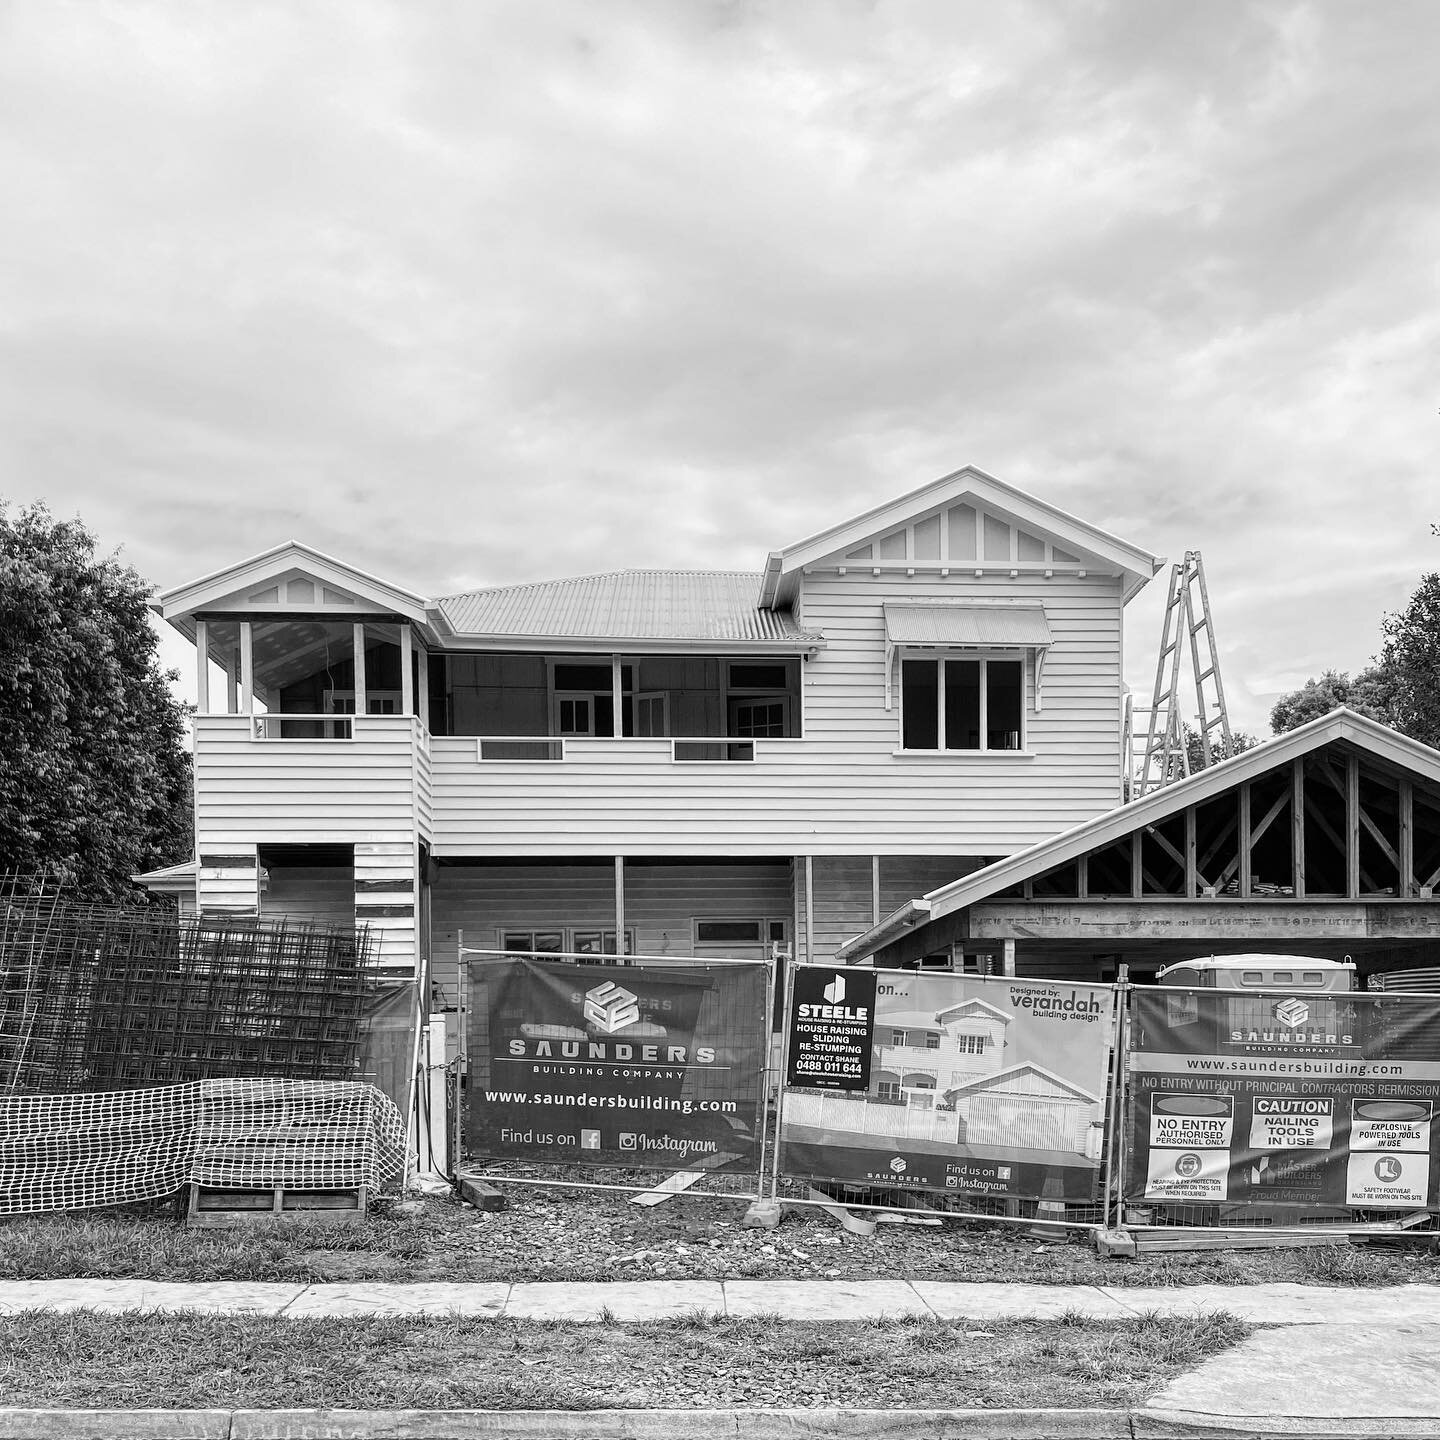 Construction progress. Grange character house renovation.
Porch &amp; gable bungalow with L-shaped verandah (c.1910s-1920s).
...
#vbd1912 #grange #brisbane #renovation #reno #queenslander #queenslanderhome #queenslanderhouse #queenslanderrenovation #